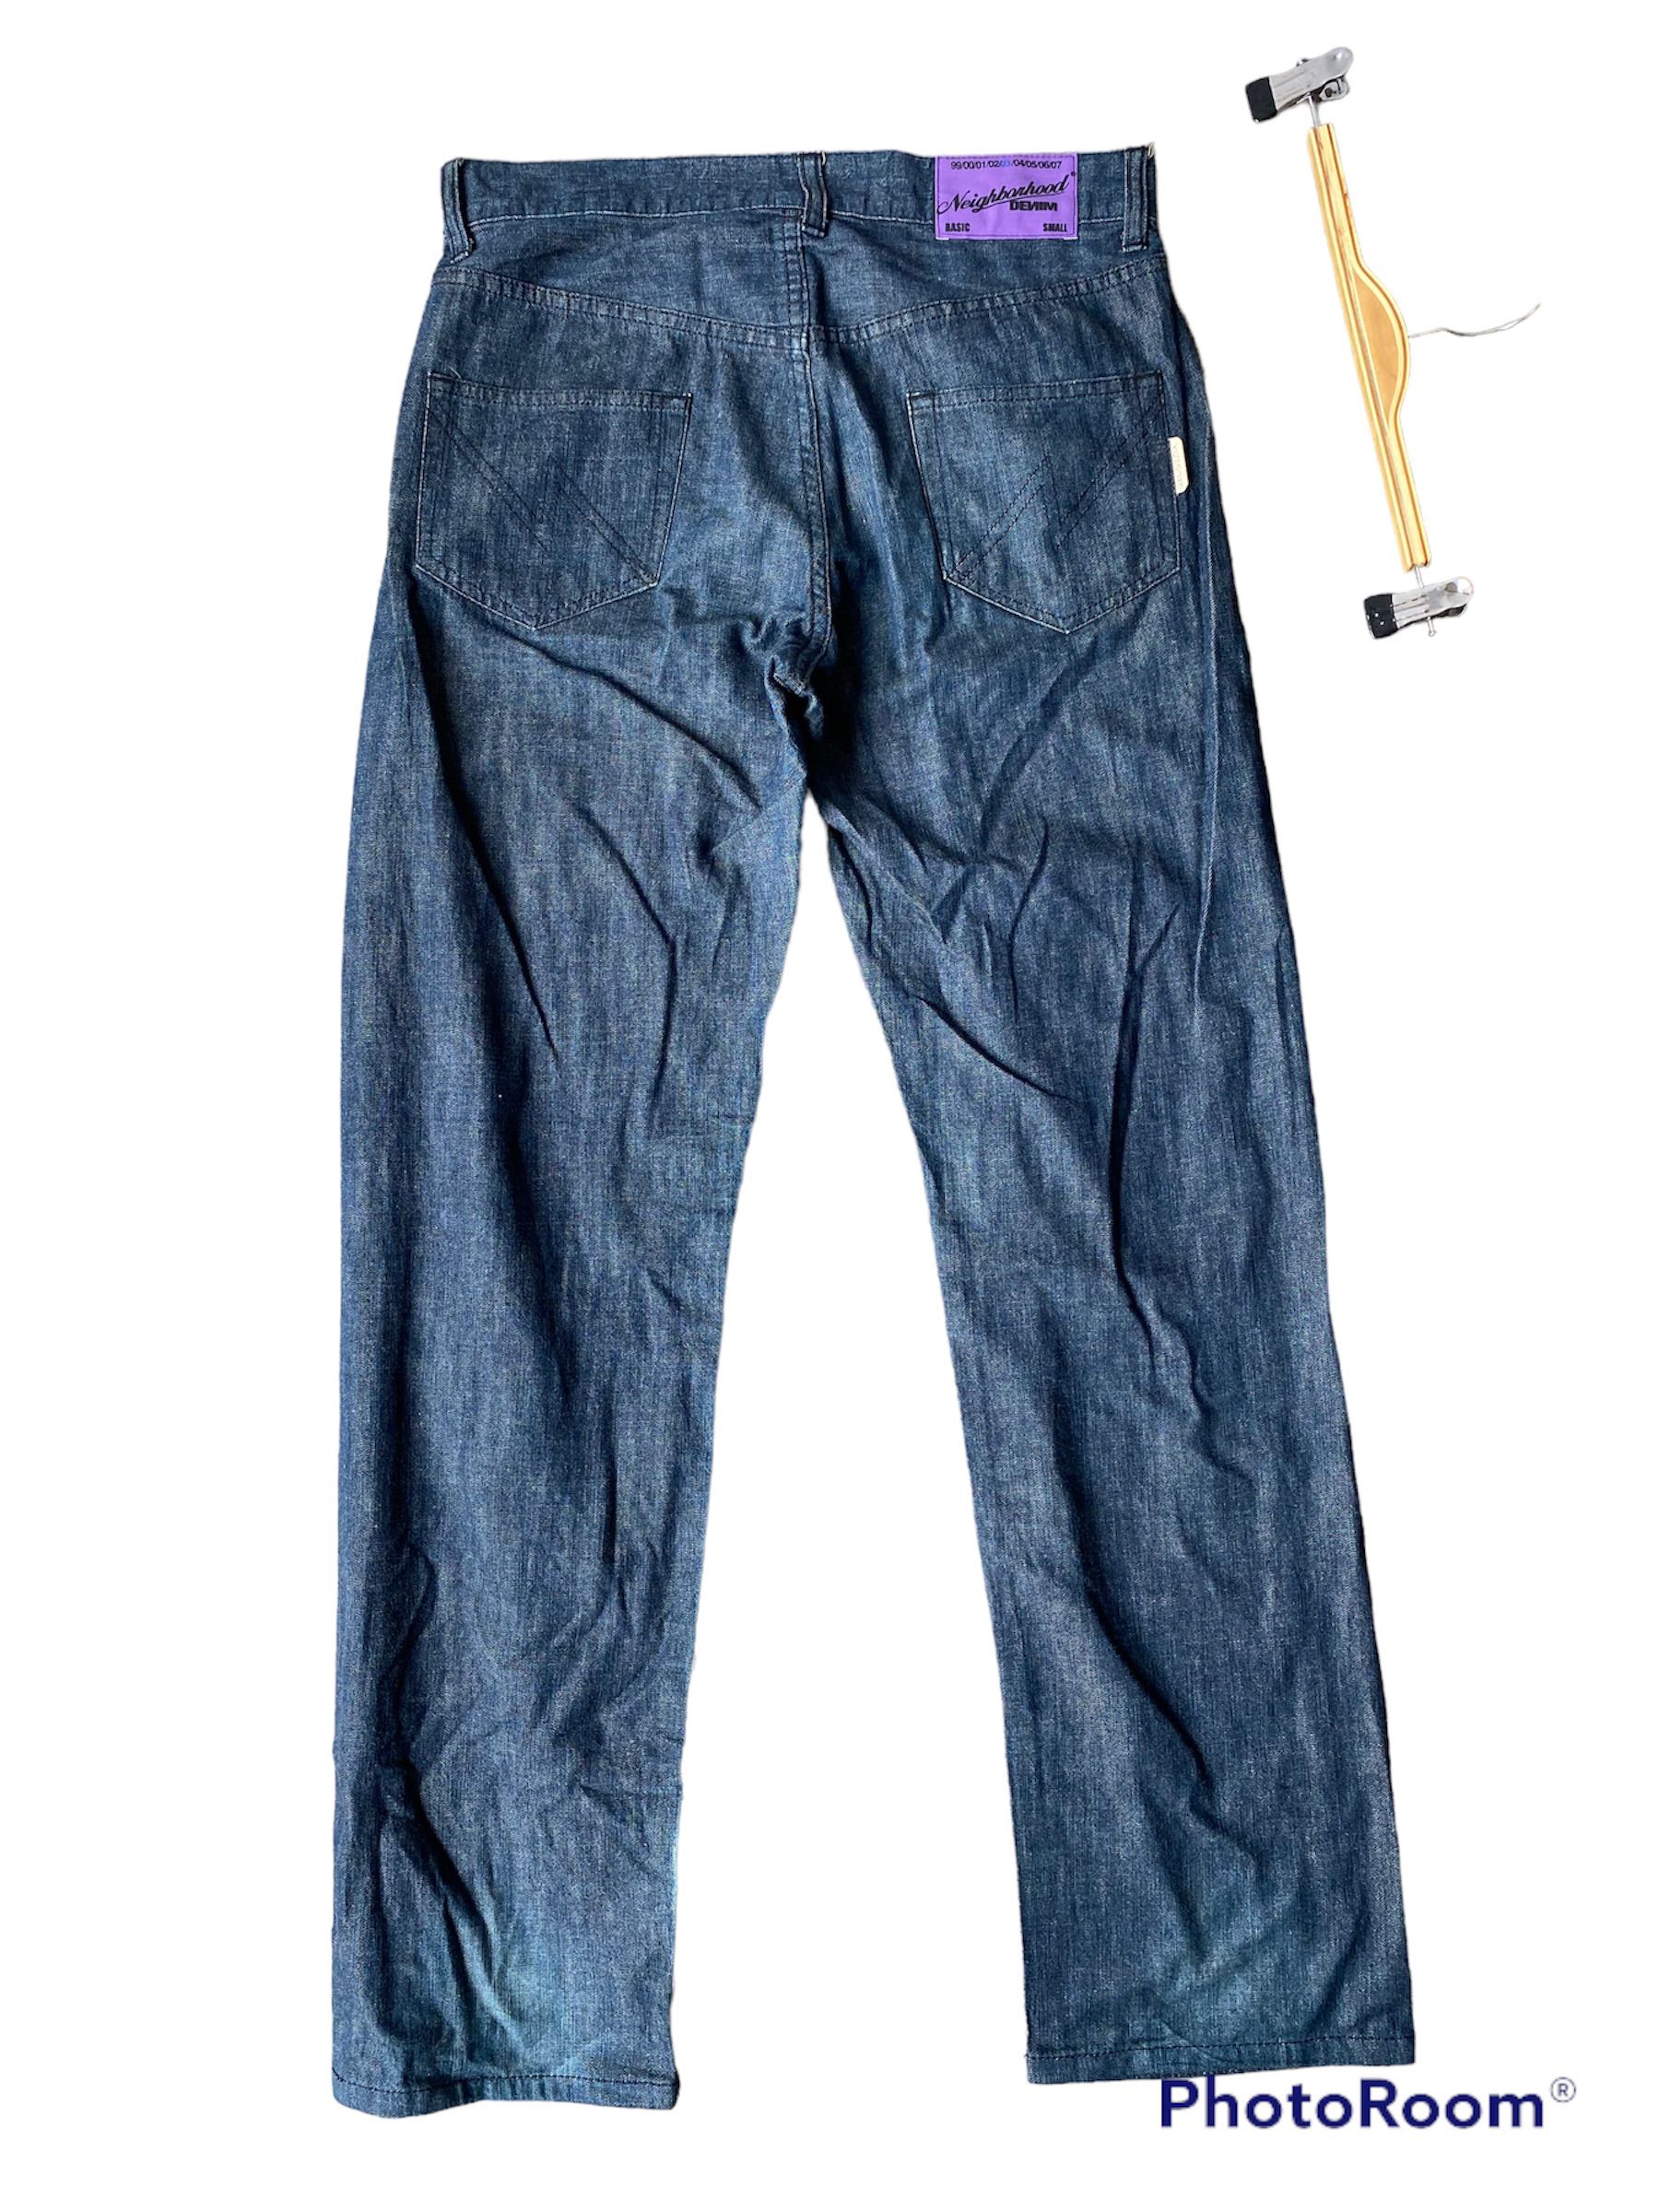 Neighboorhood Narrow Straight Non-Selvedge Jeans - 1